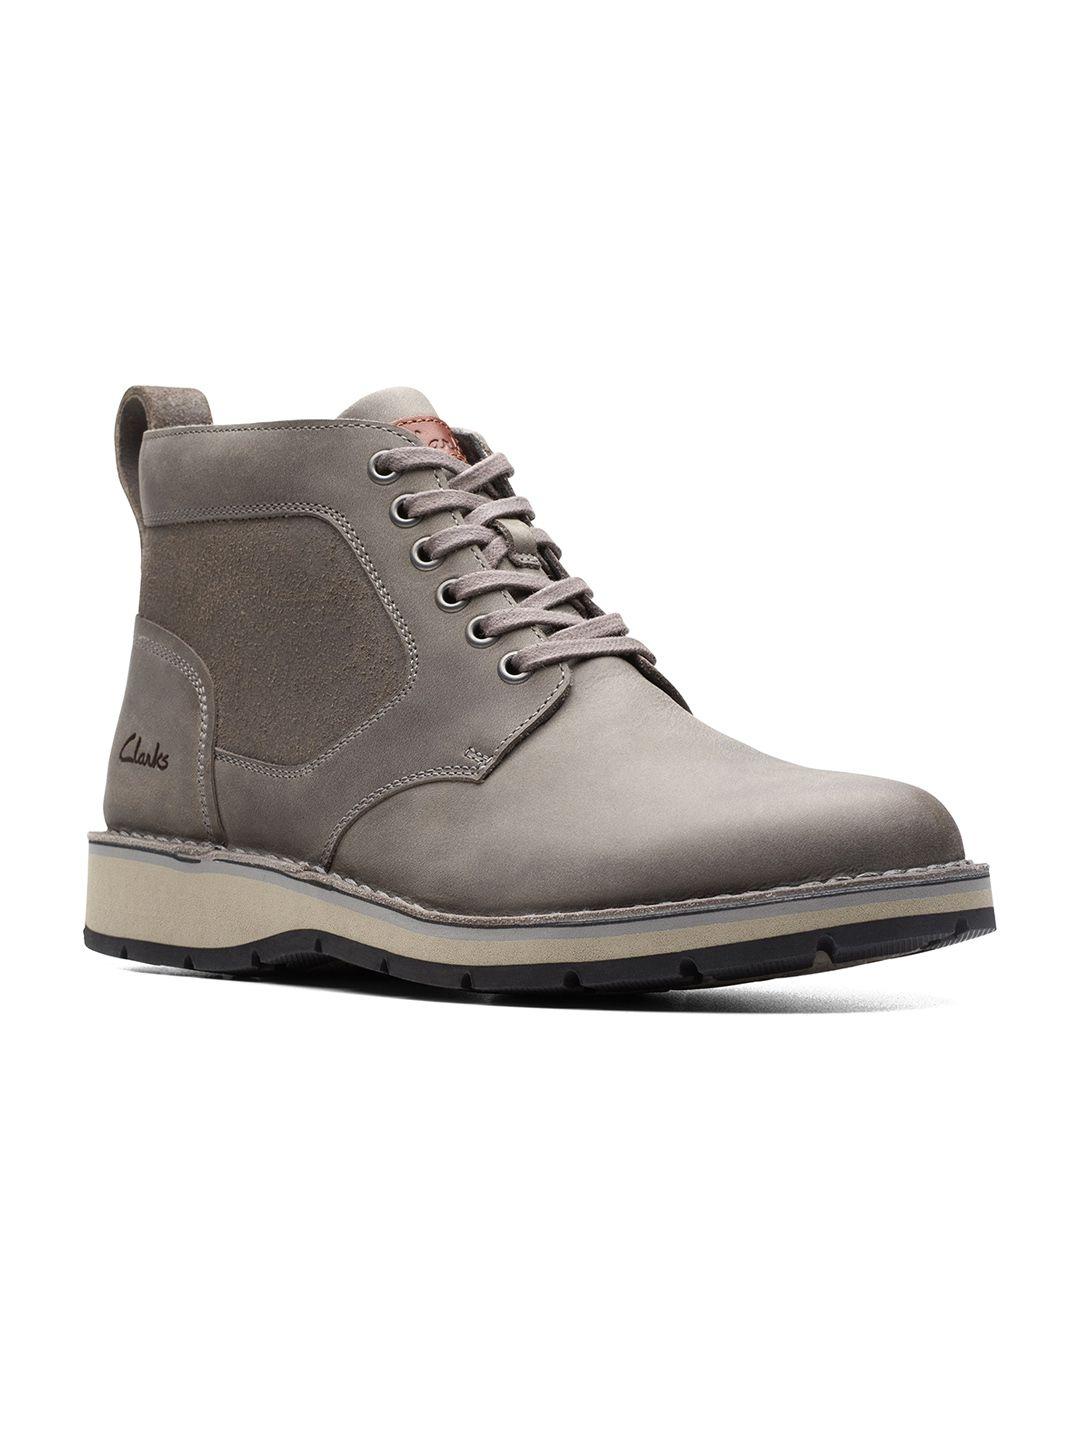 clarks-men-gravelle-mid-top-leather-regular-boots